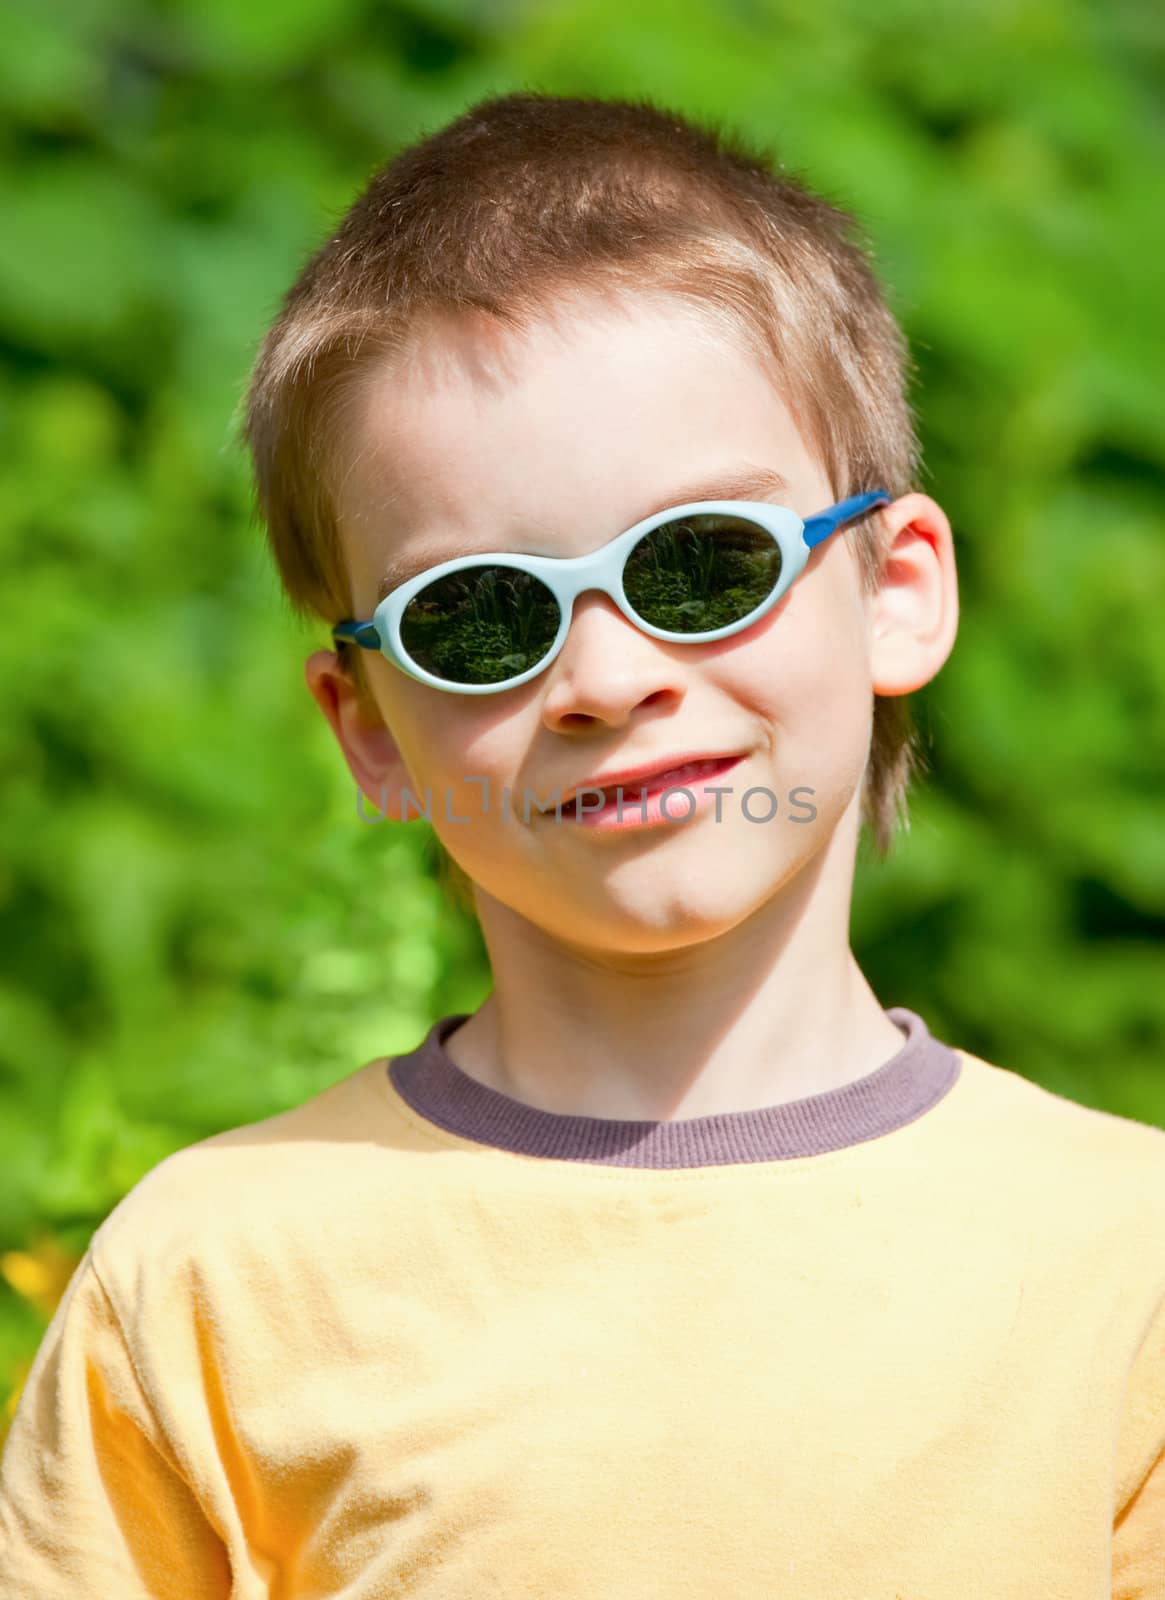 Kid wearing sunglasses by naumoid